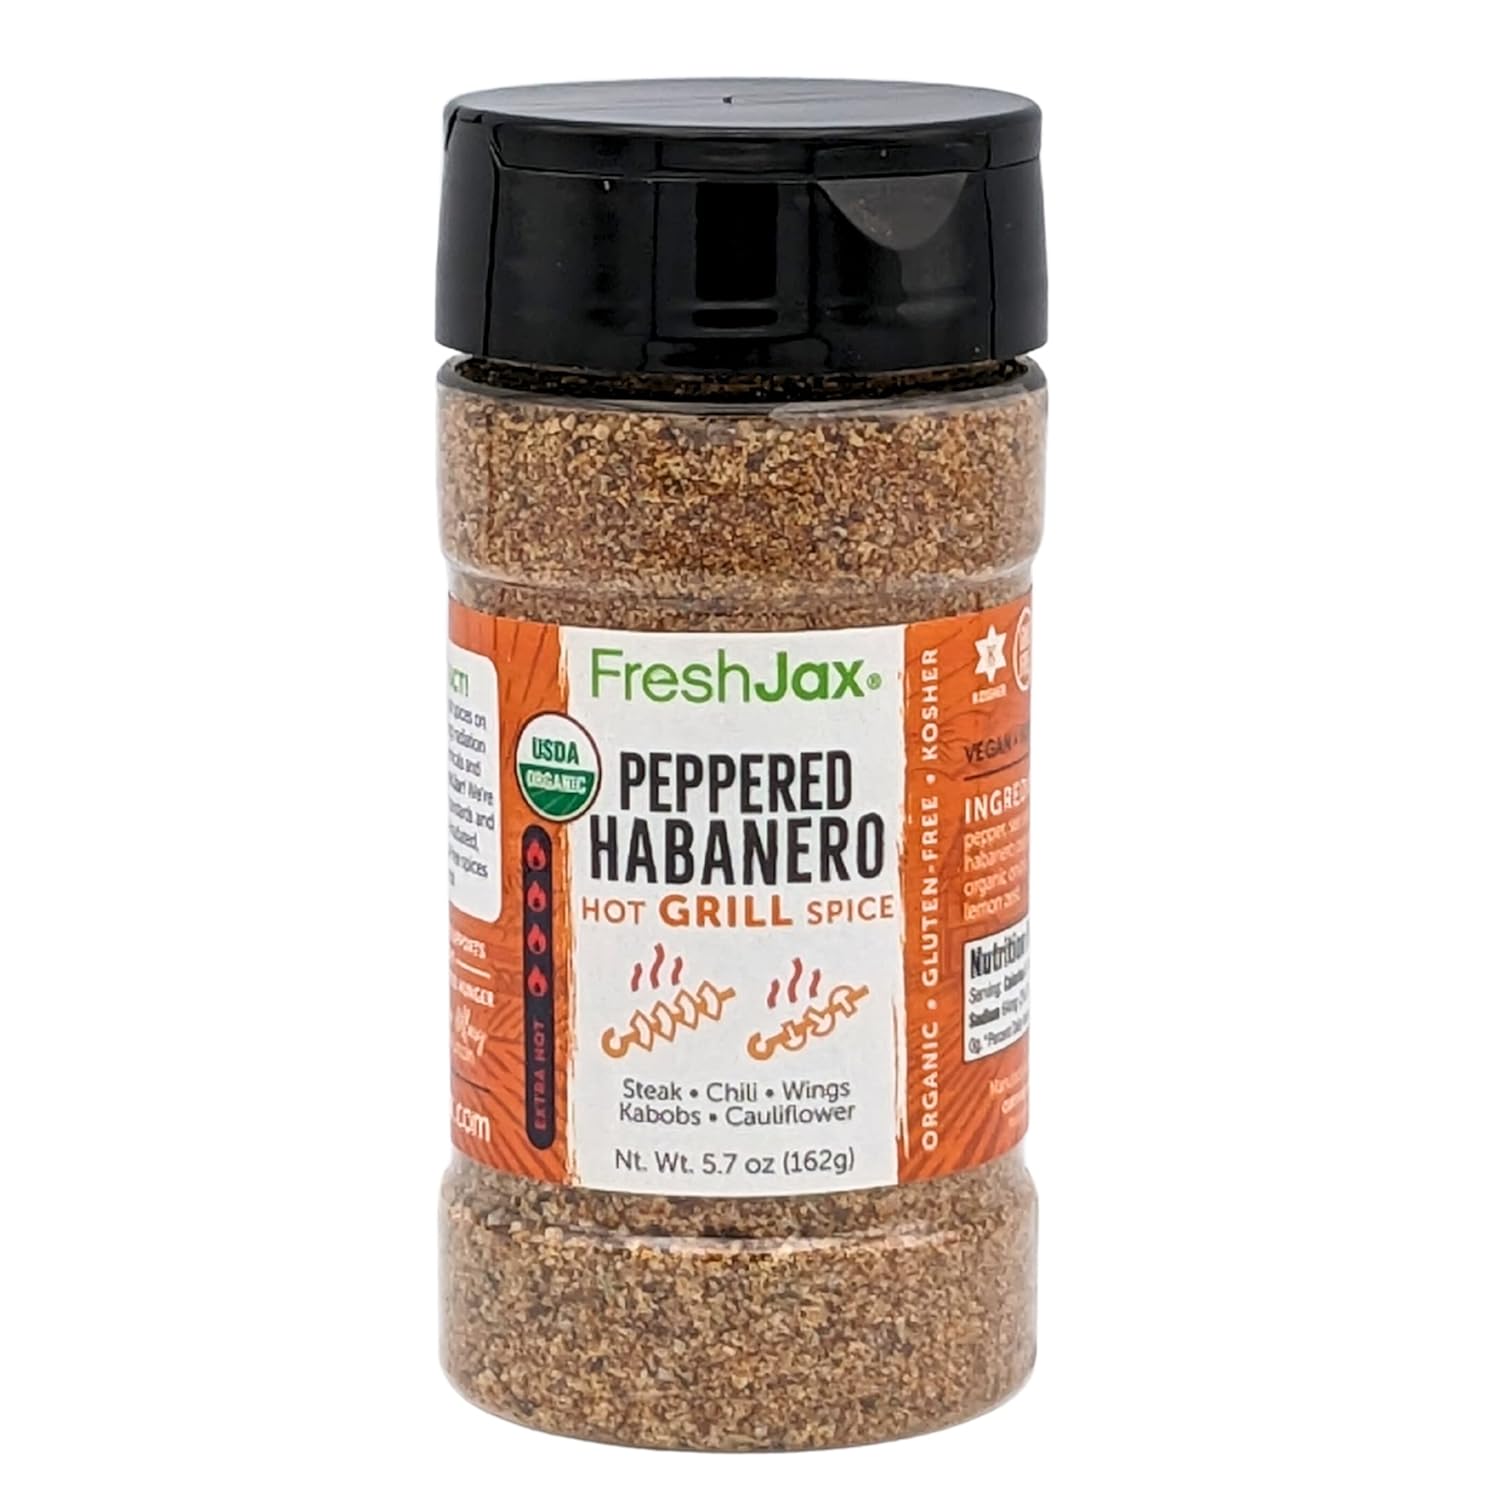 FreshJax Organic Peppered Habanero Hot Grilling Seasoning Spice (5.7 oz Large Bottle) Non GMO, Gluten Free, Keto, Paleo, No Preservatives Habanero Pepper Powder Blend | Handcrafted in Jacksonville